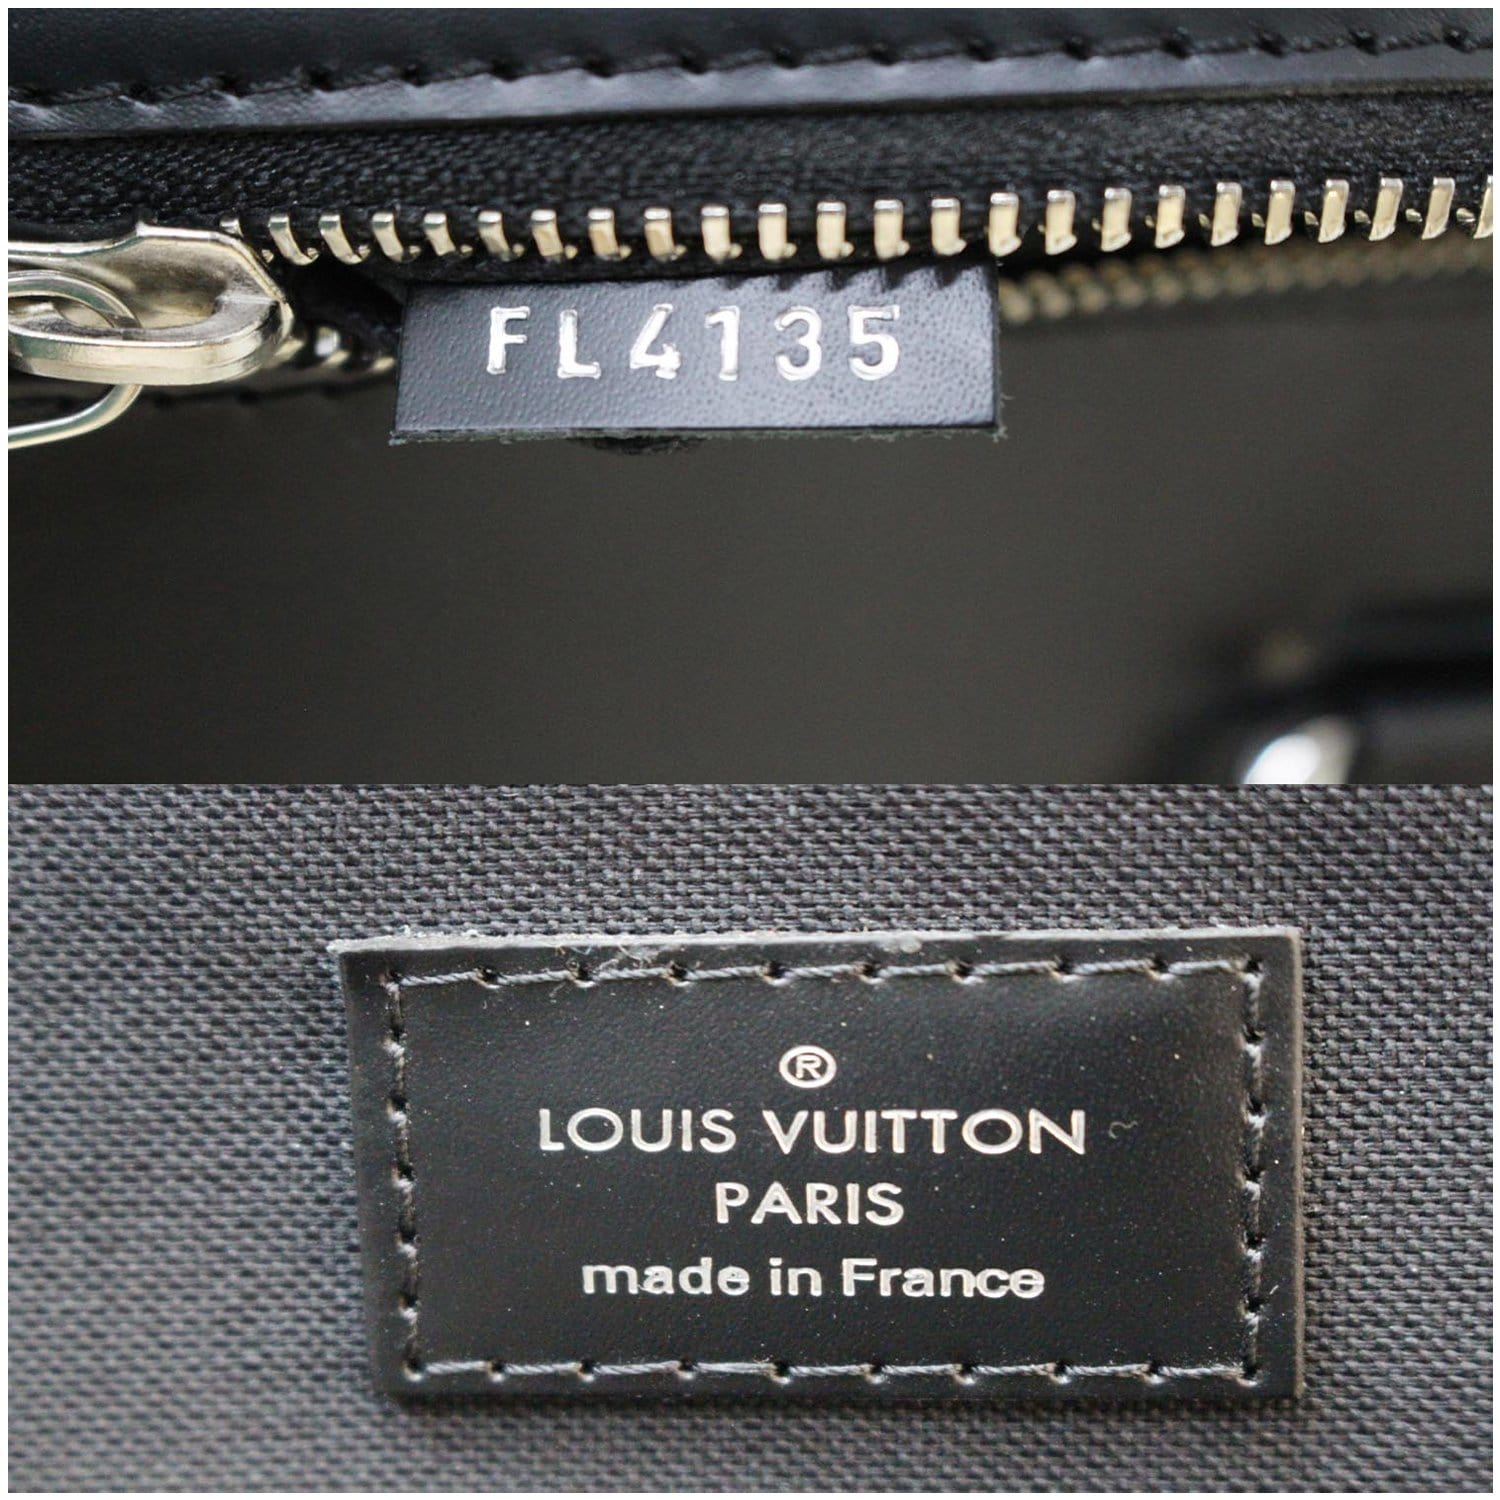 LOUIS VUITTON OVERNIGHT BAG DAMIER GRAPHITE CANVAS N41004